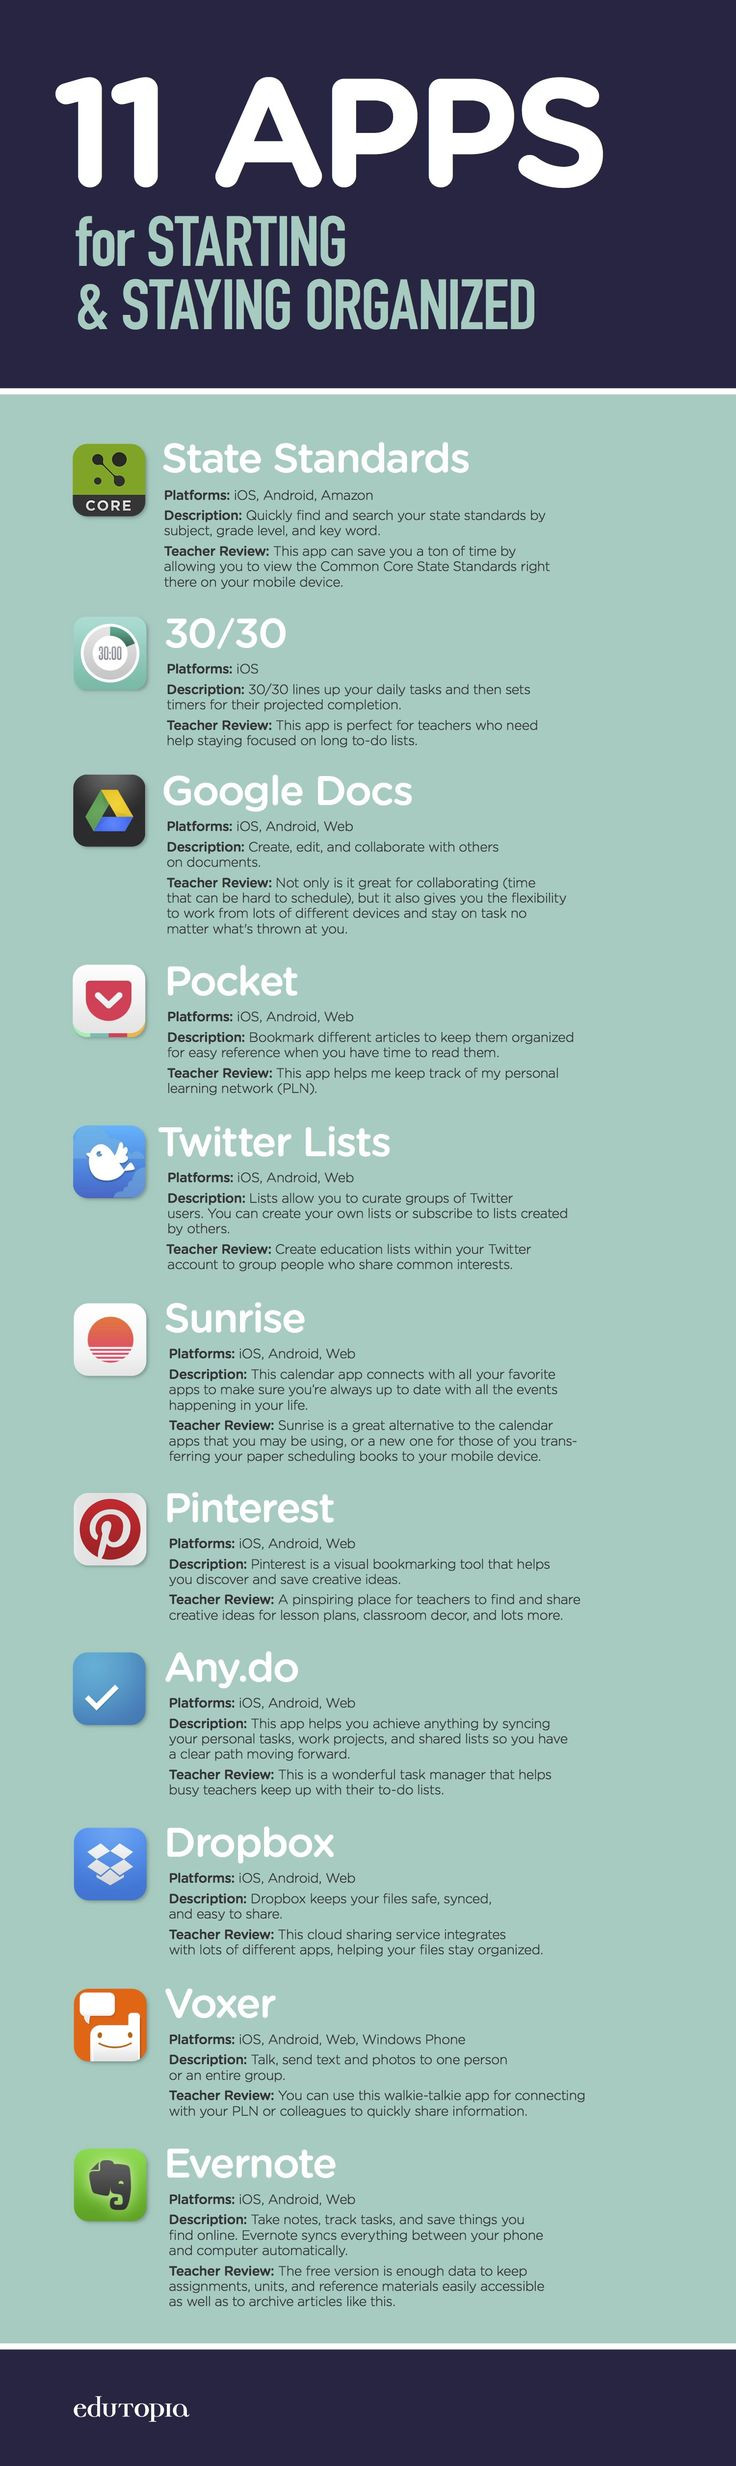 School Organization Apps
 25 best ideas about School organization on Pinterest